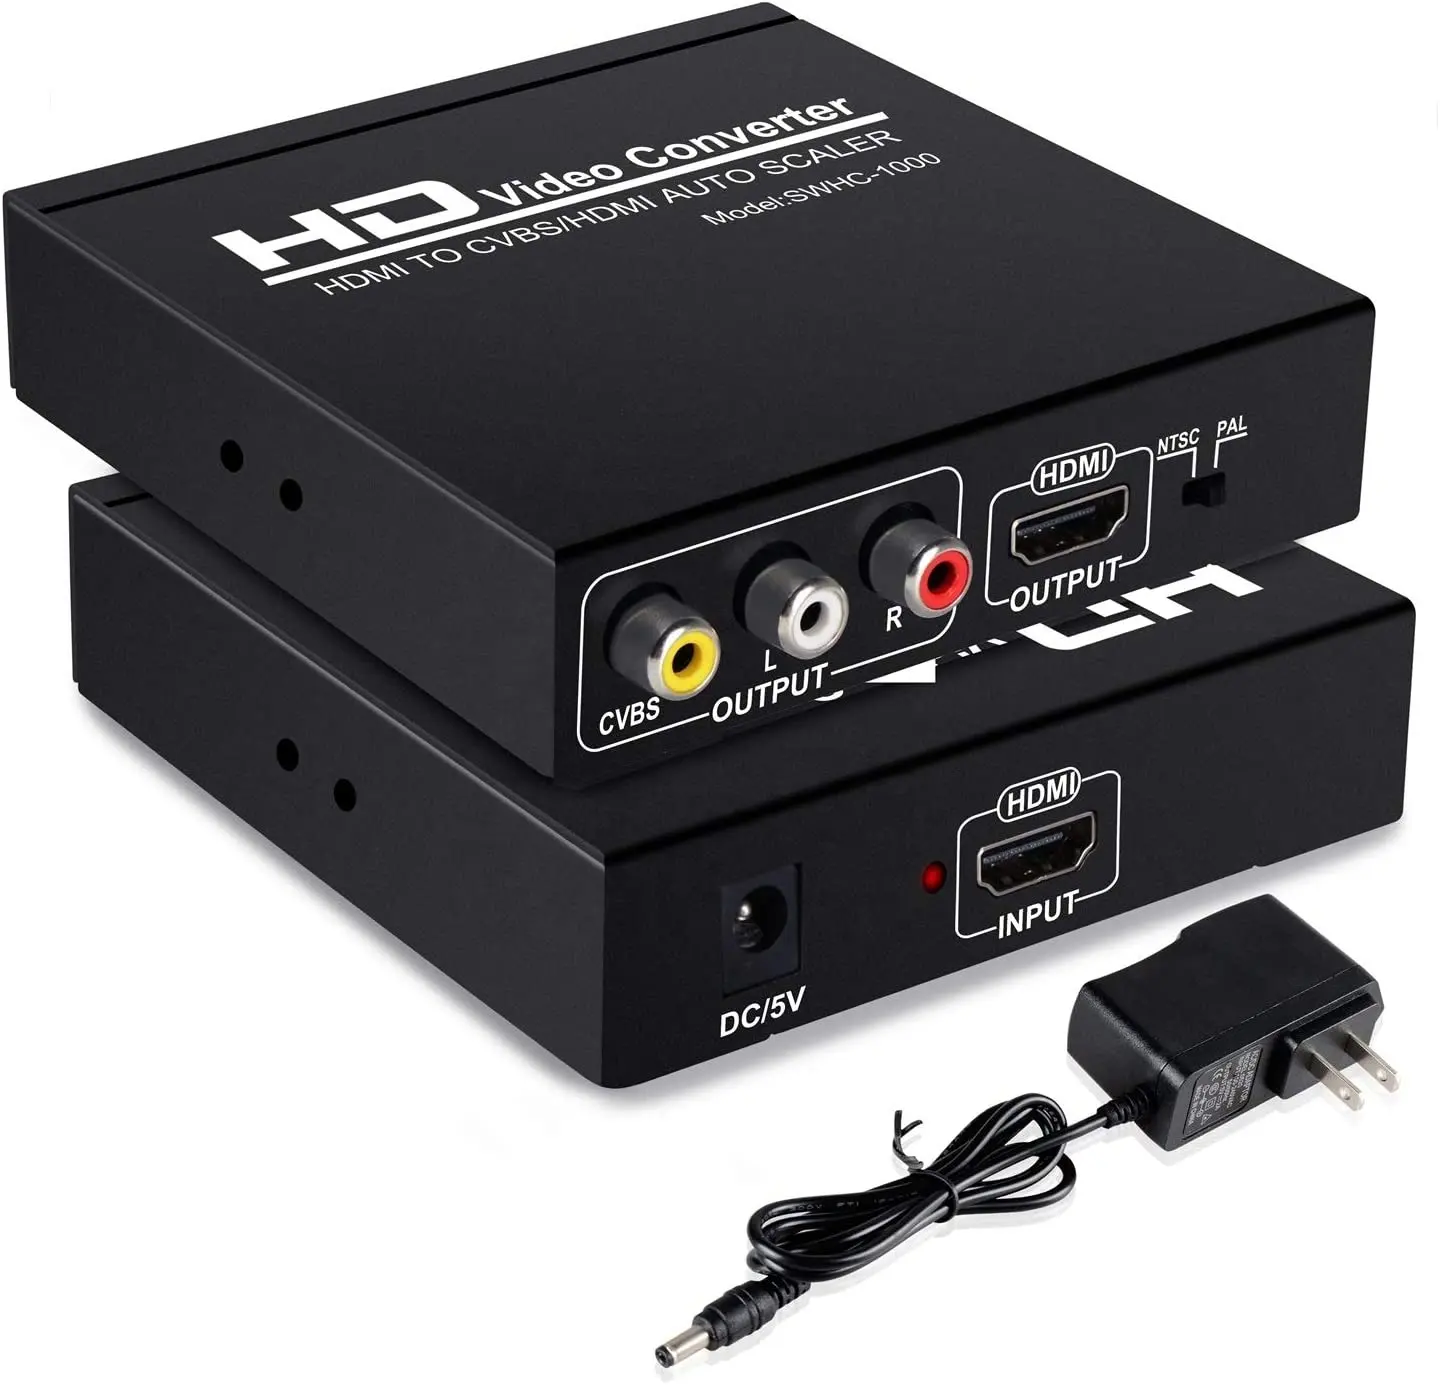 OZ1000 HDMI to RCA and HDMI + 3RCA CVBS AV Converter Composite Video Audio Adapter Splitter Support 1080P PAL NTSC